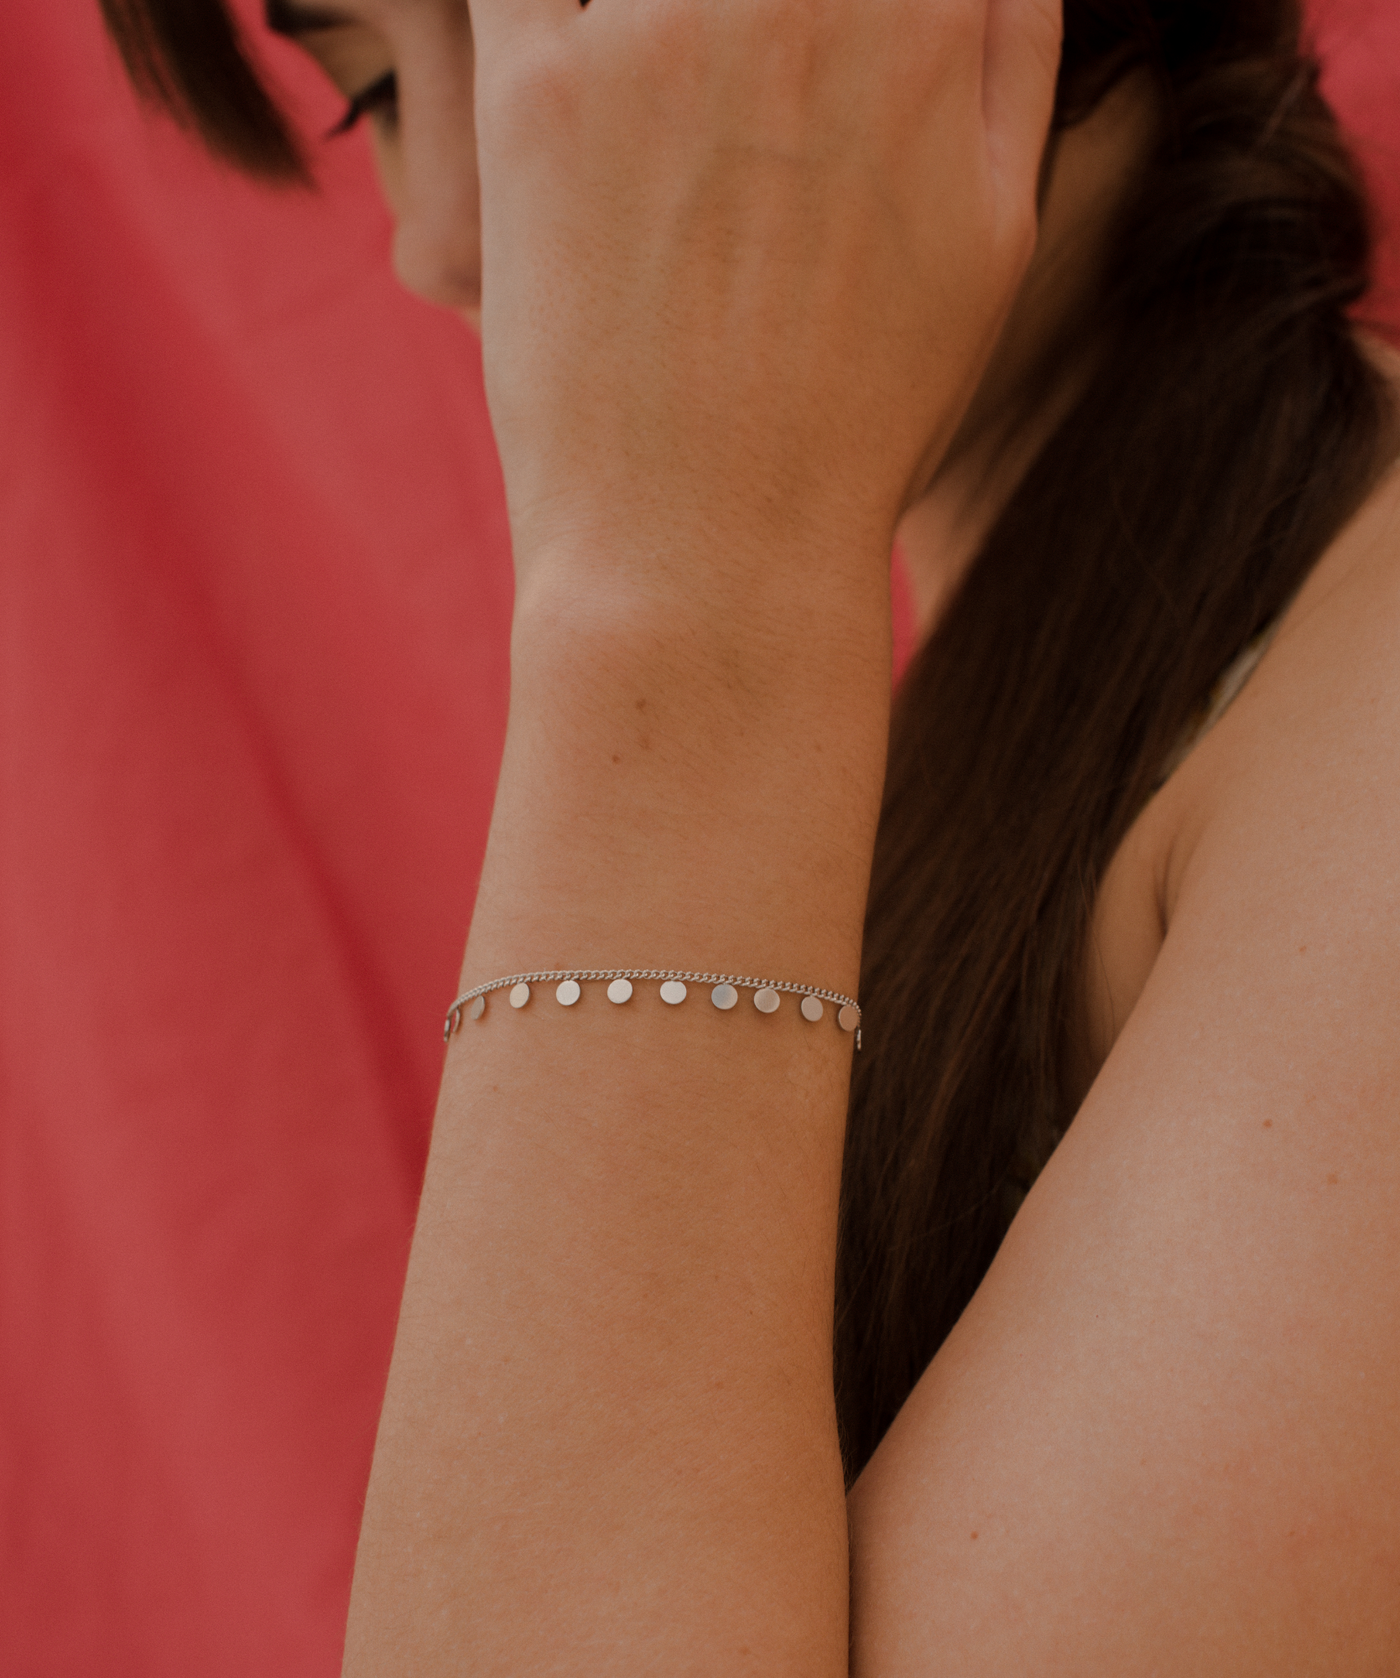 Frau trägt feminines Armband mit Plättchen Anhänger aus Edelstahl 